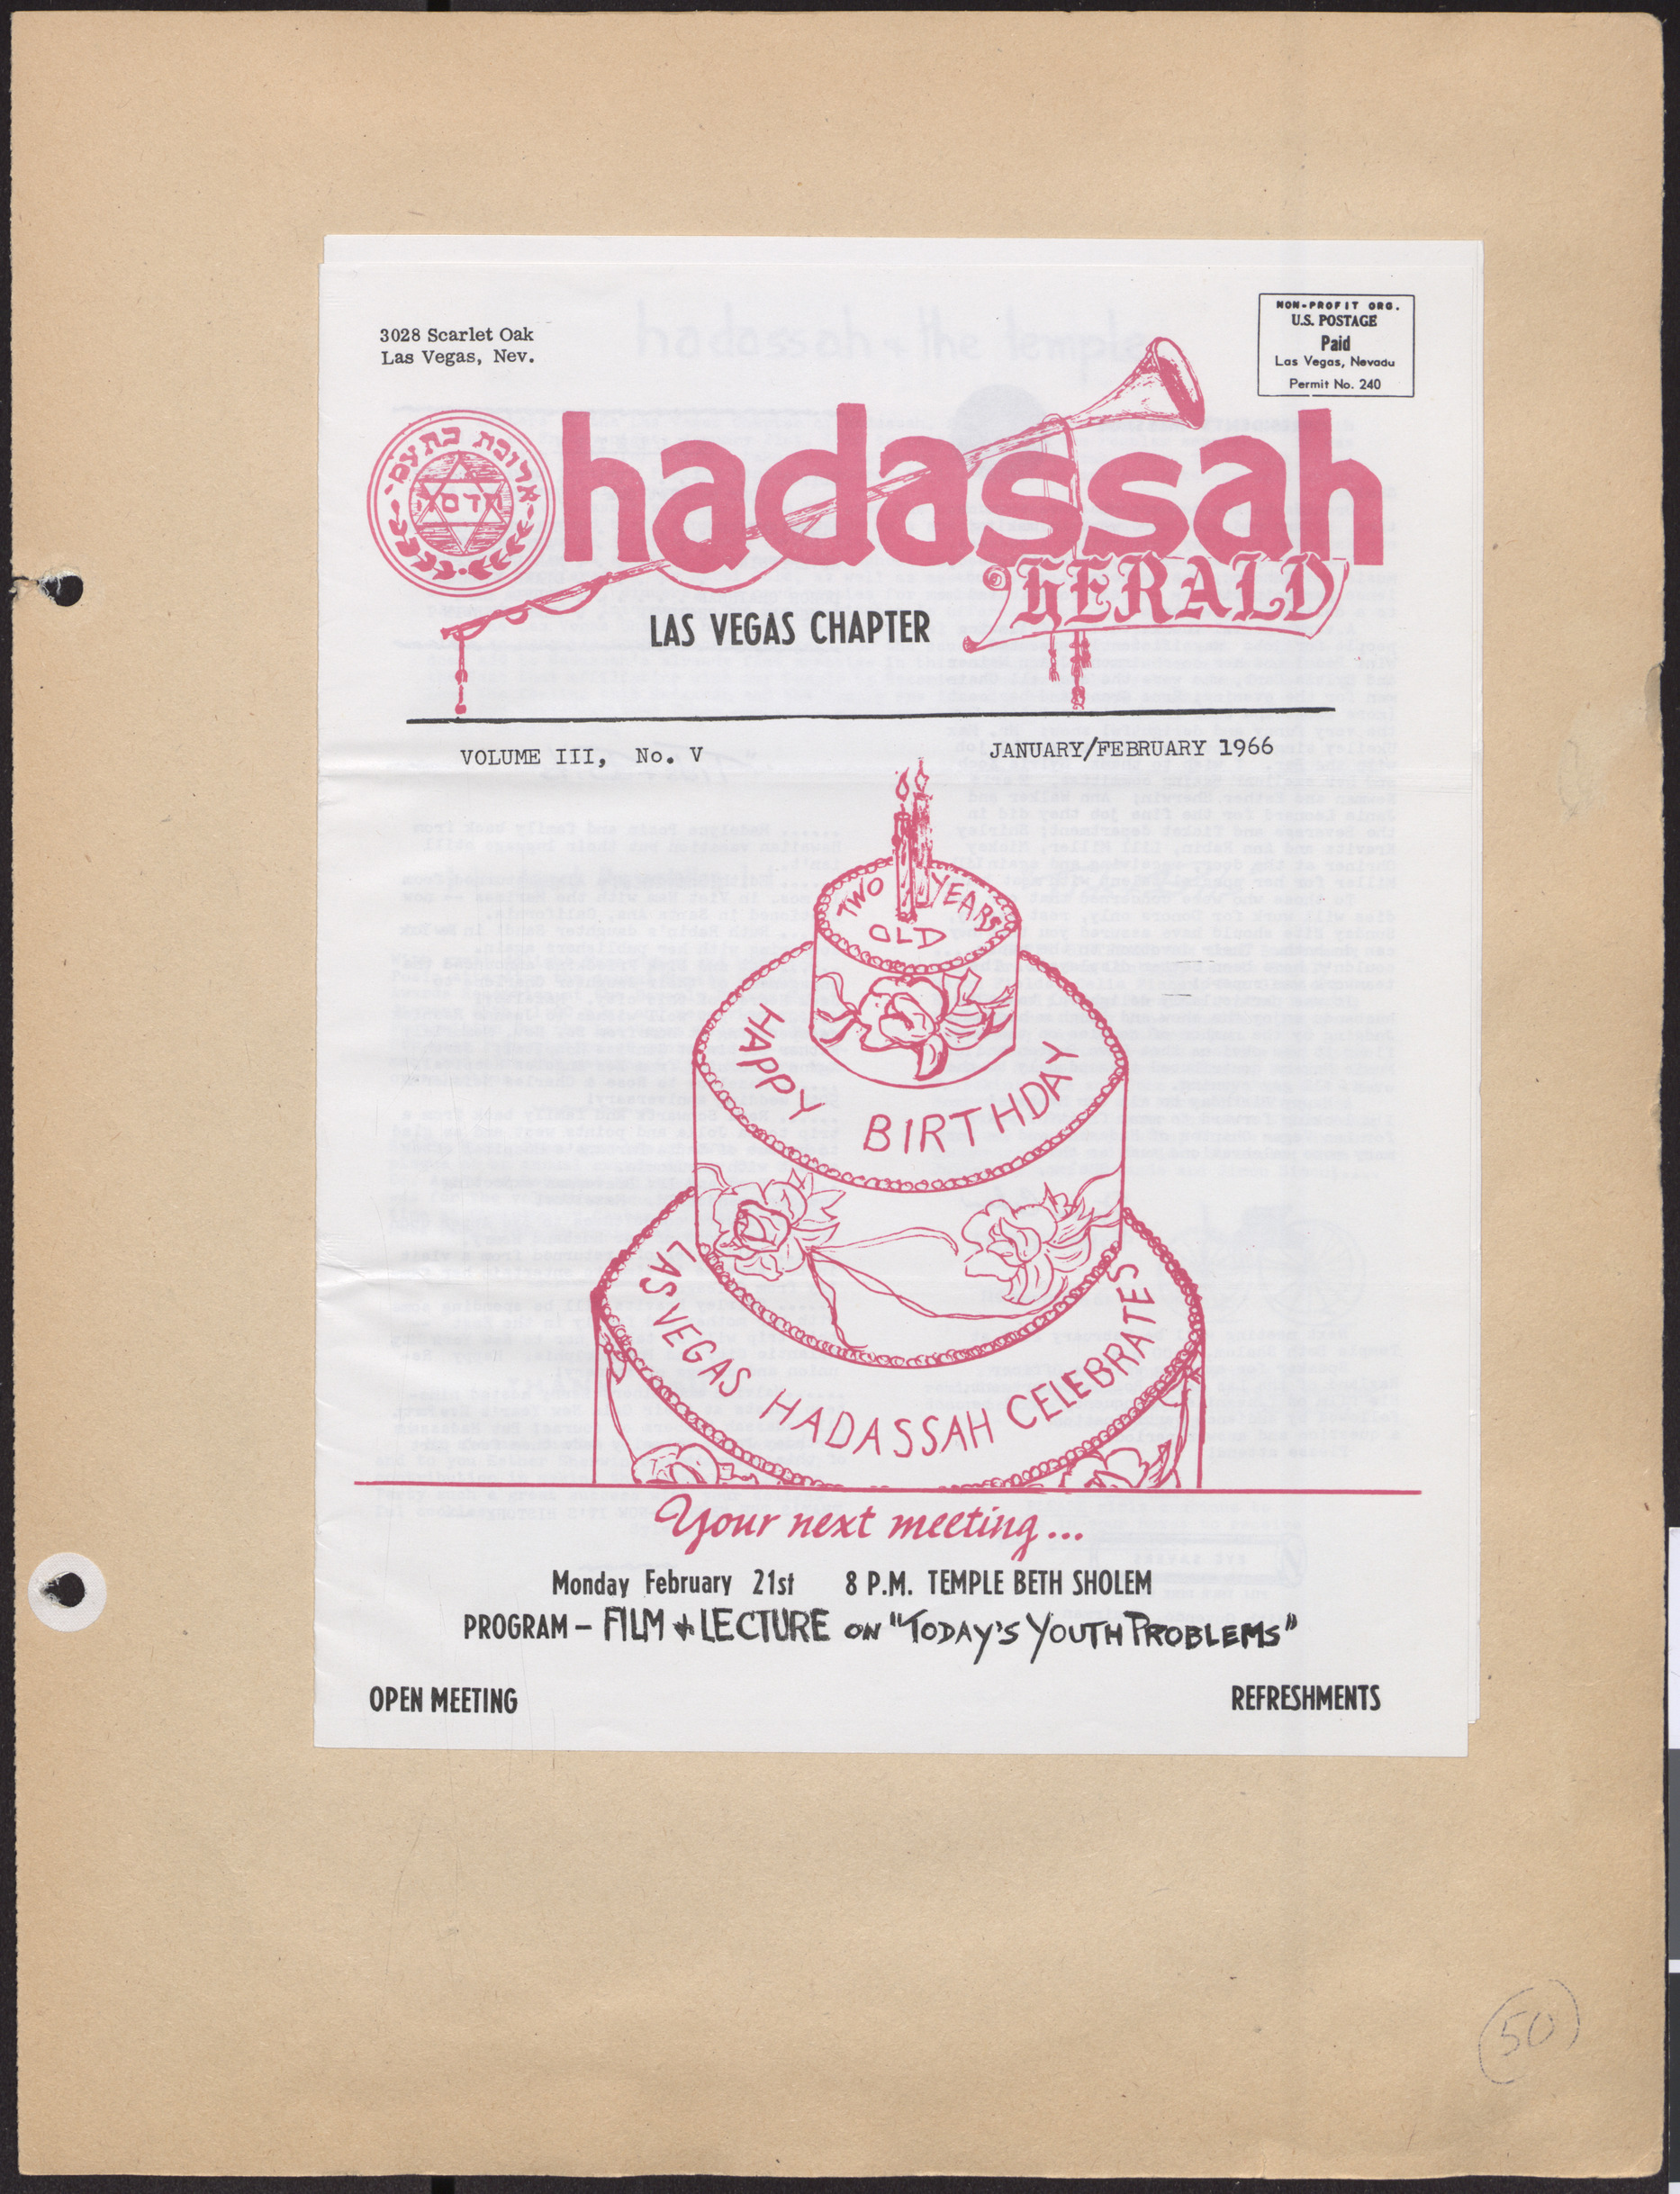 Hadassah Las Vegas Chapter newsletter, January/February 1966, cover